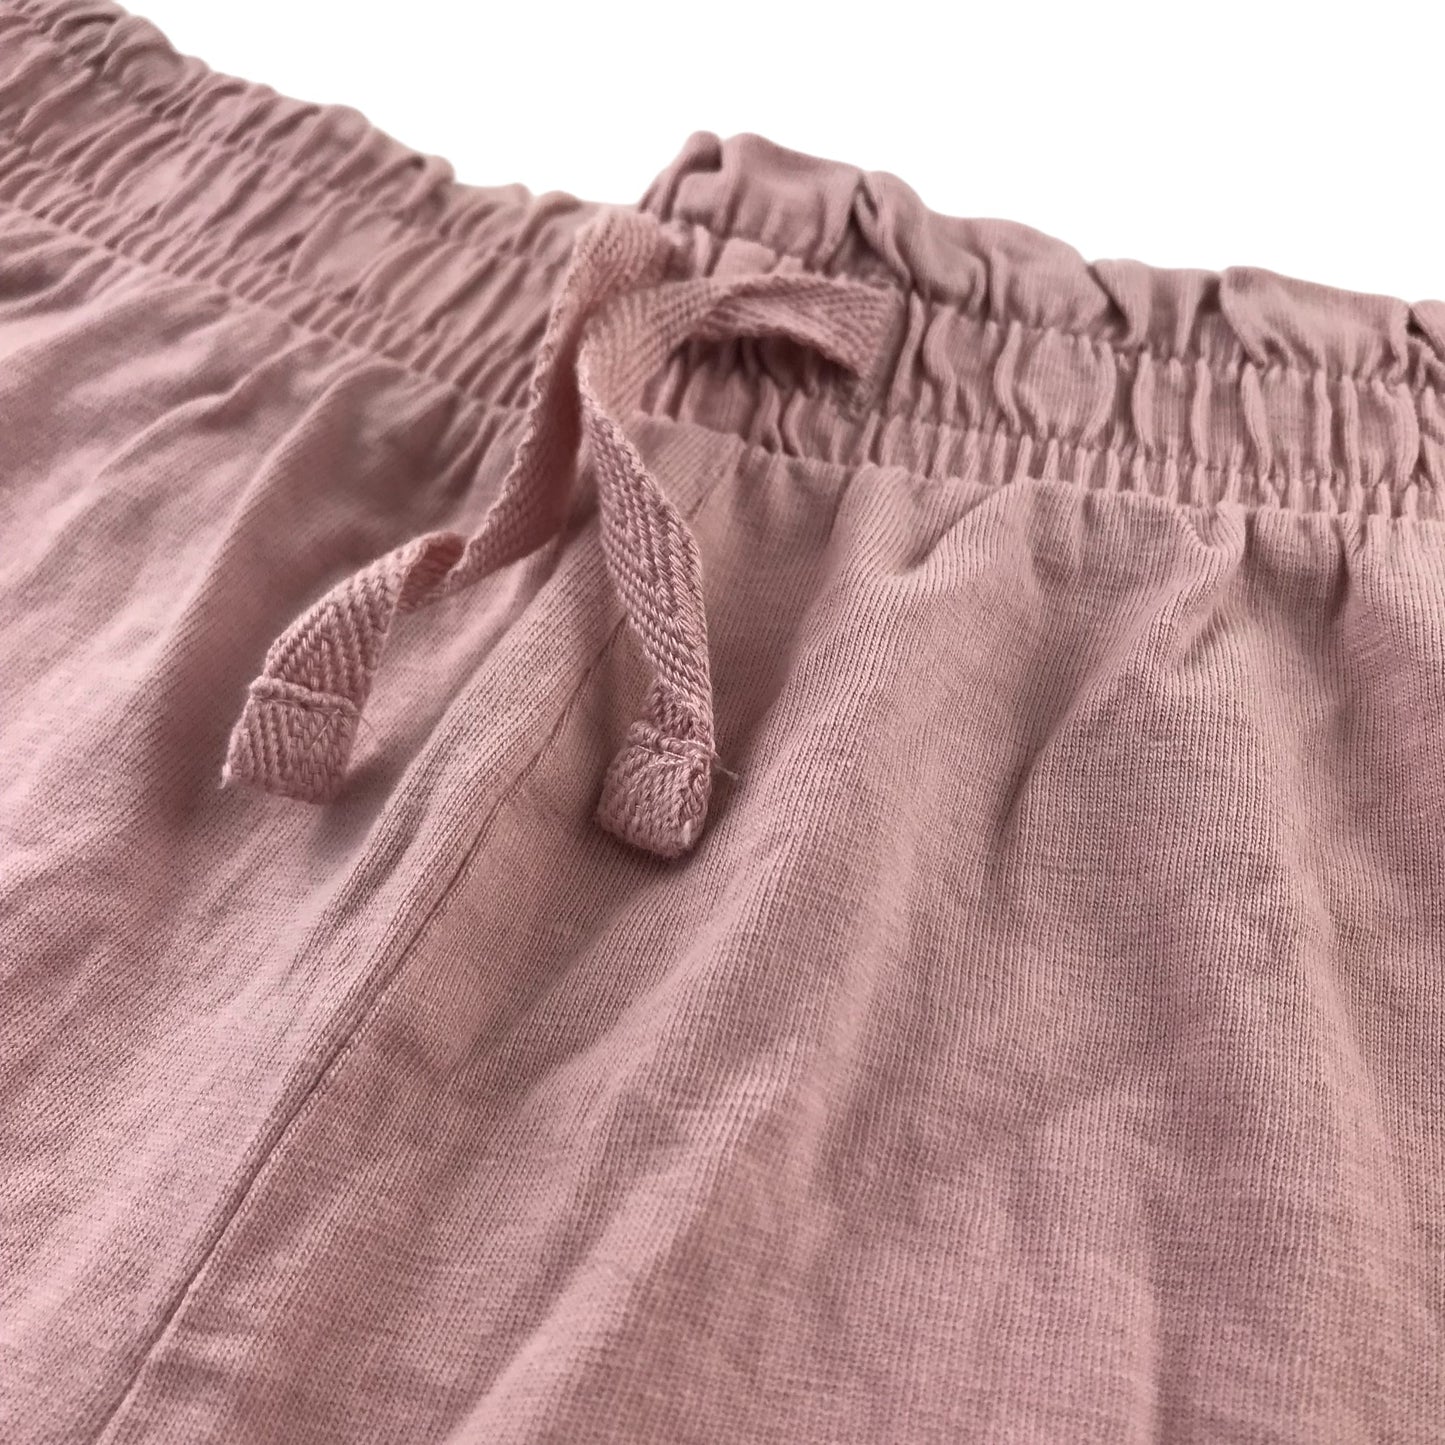 Tu Shorts Set Light blue and Light Pink Jersey Cotton